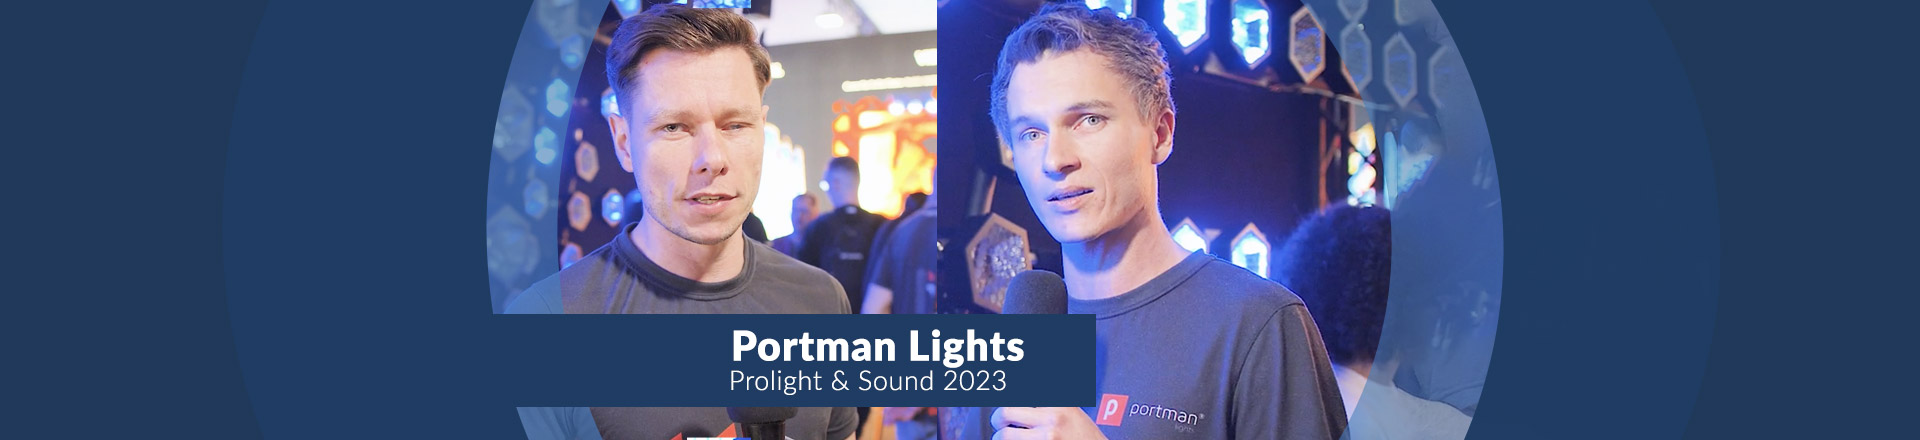 Portman: oprawy LED z pazurem! [Prolight & Sound 2023]